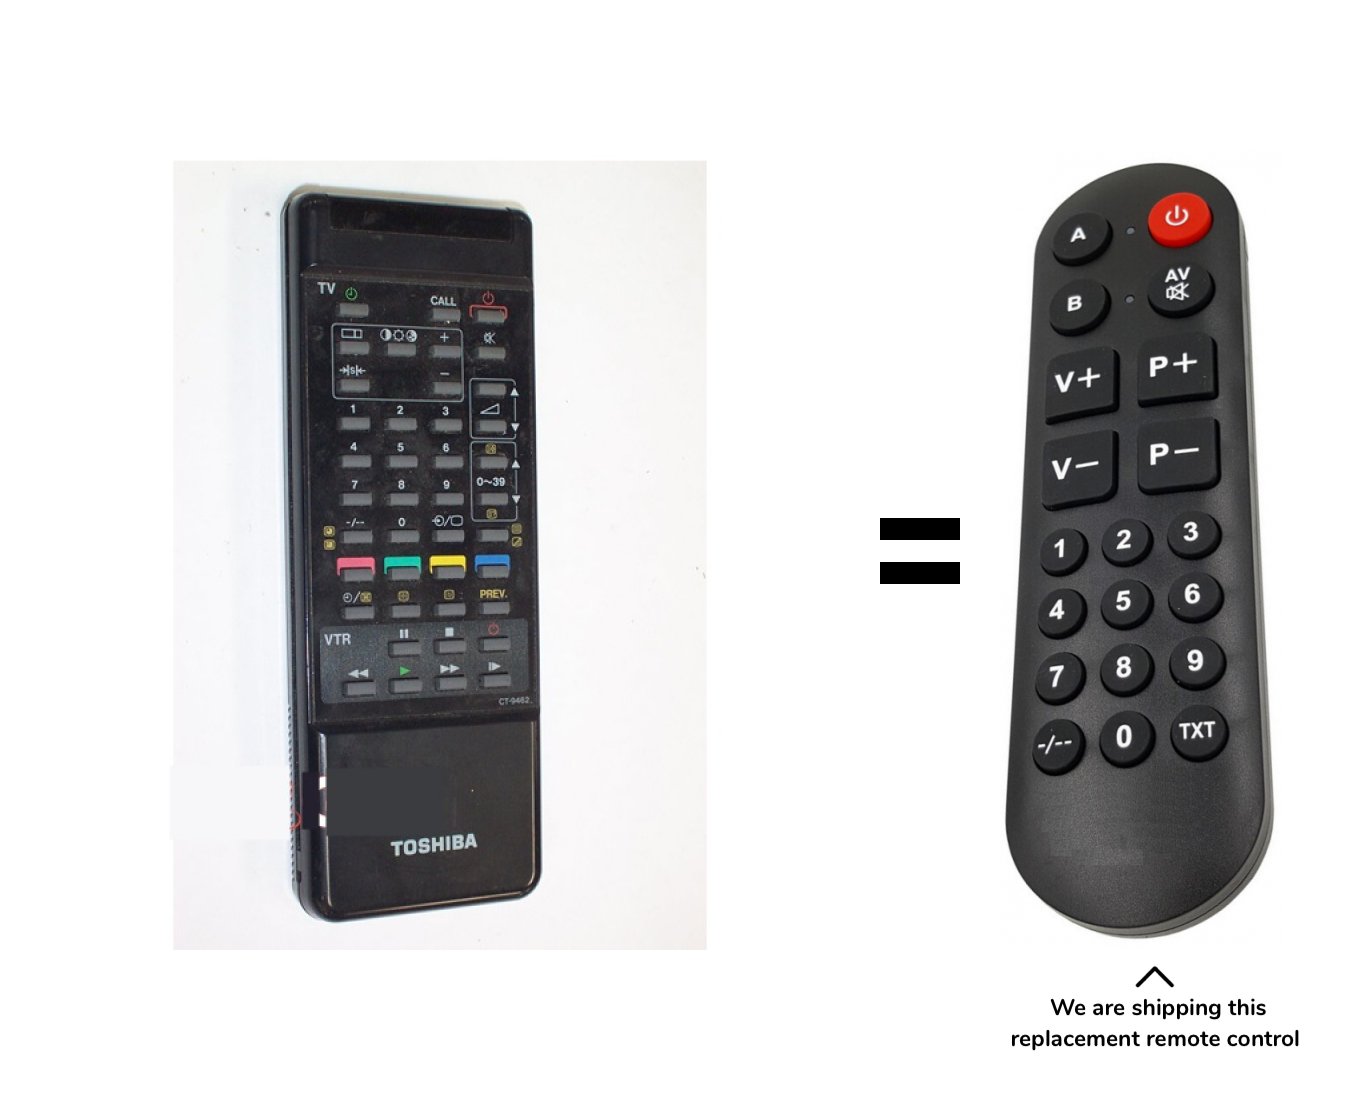 Toshiba 207T9M remote control for seniors